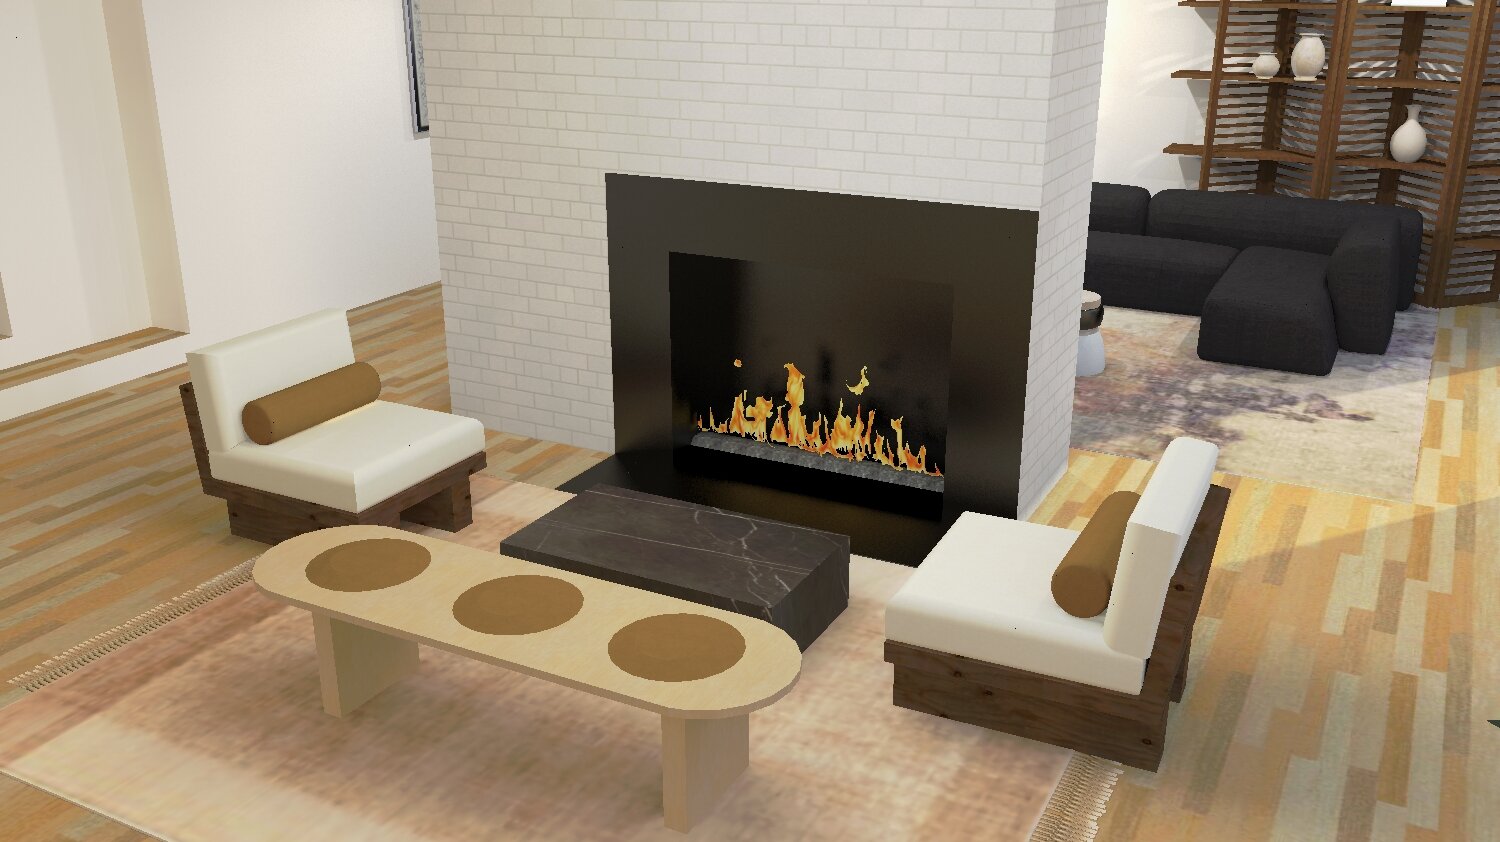 fireplace 1.jpg